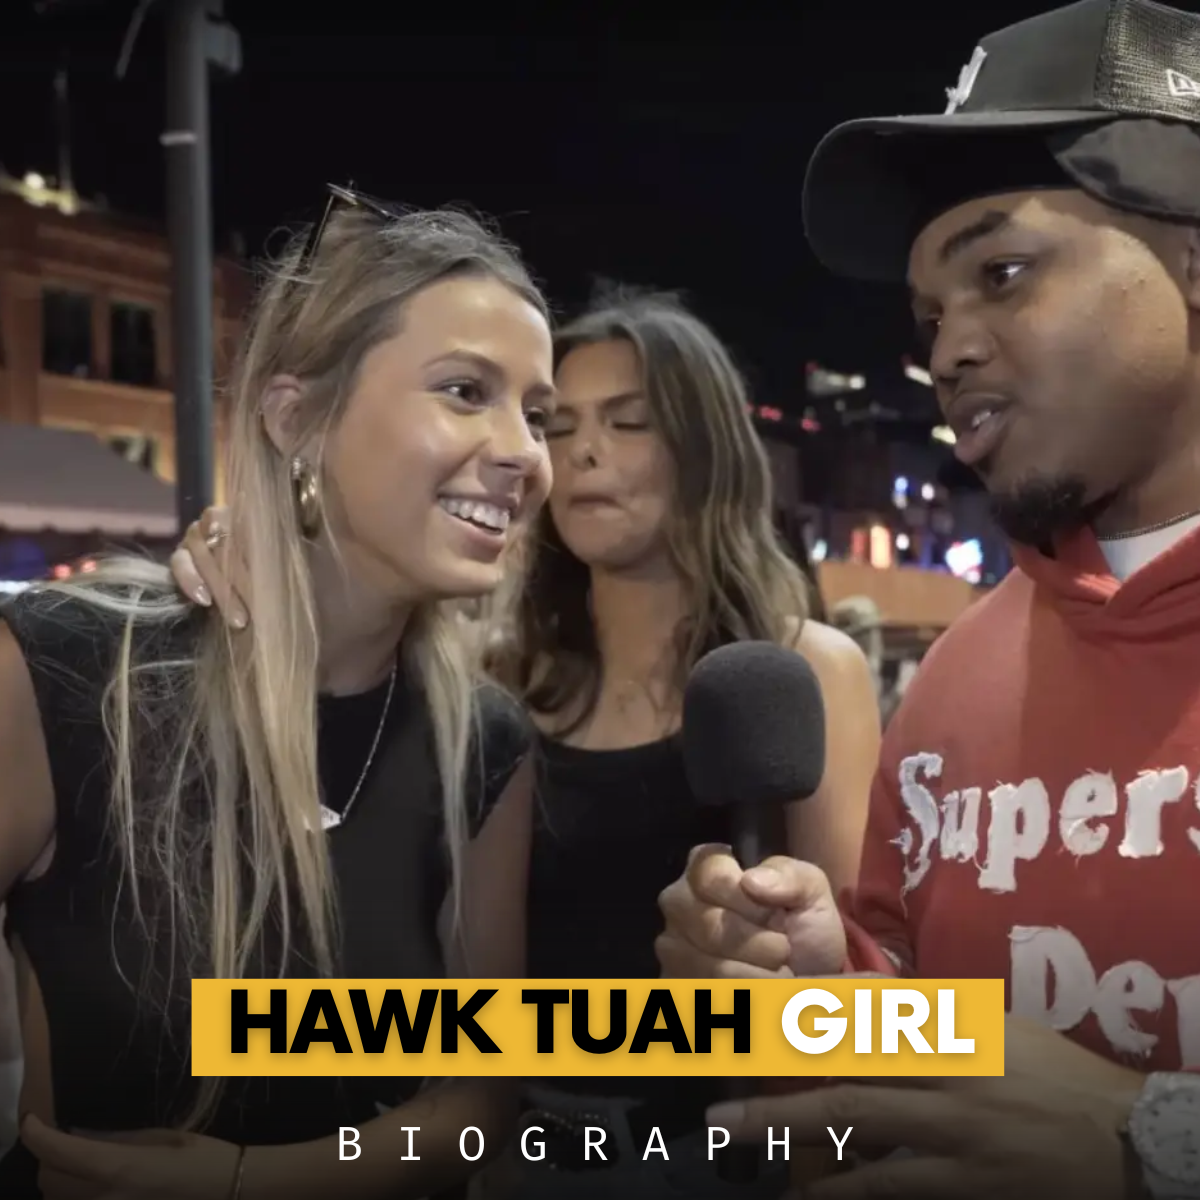 Hawk Tuah Girl biography